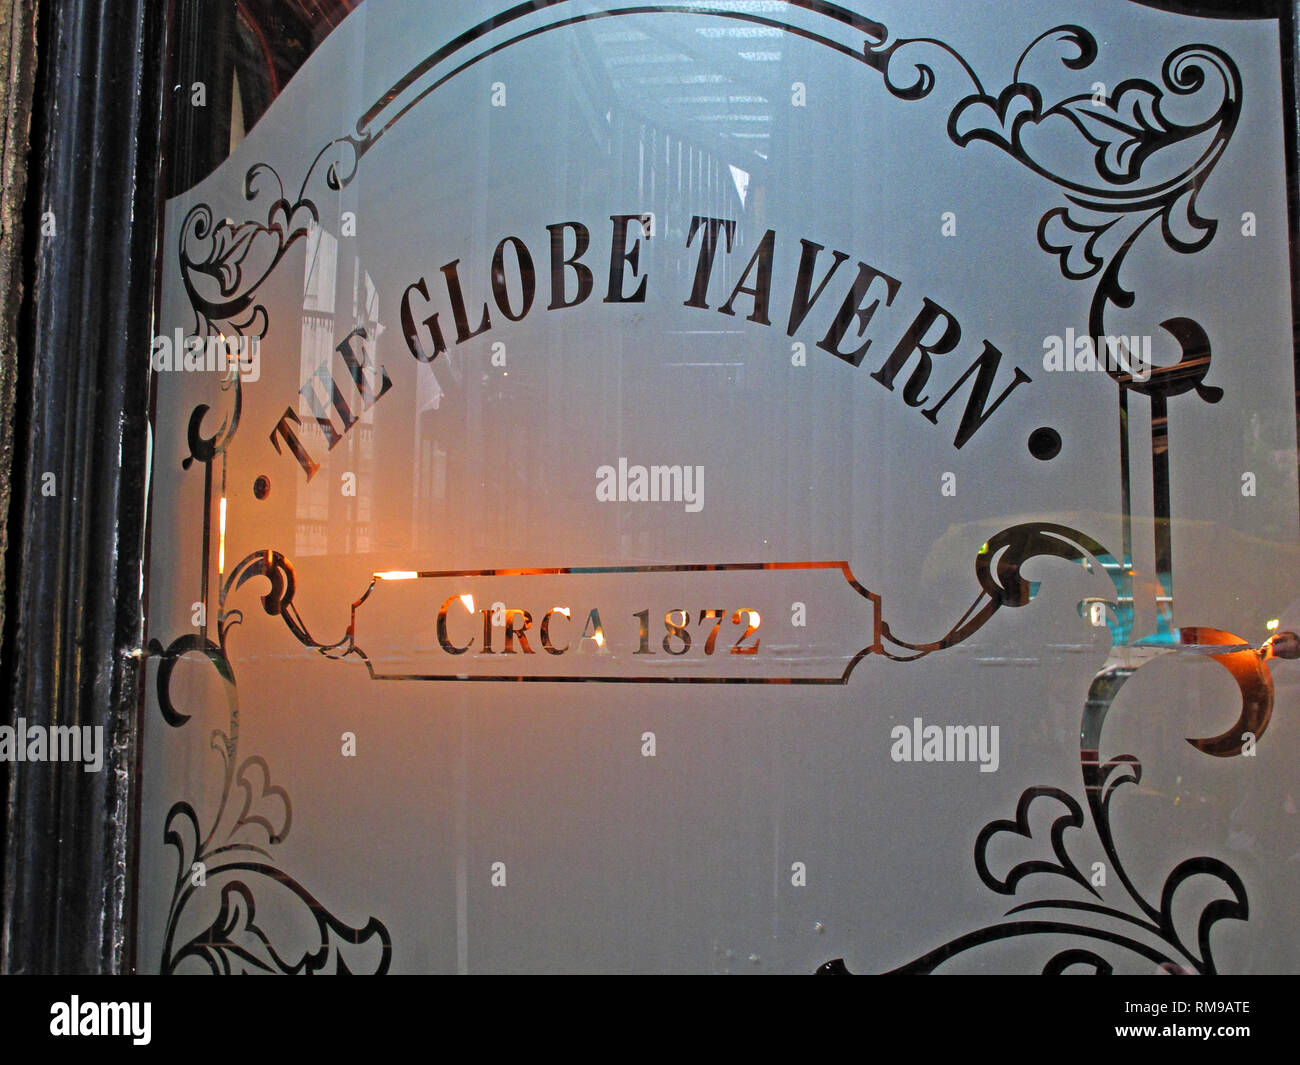 Die Globus Taverne ca. 1872 Pub, 8 Bedale St, London, England, UK, SE 1 9 AL Stockfoto